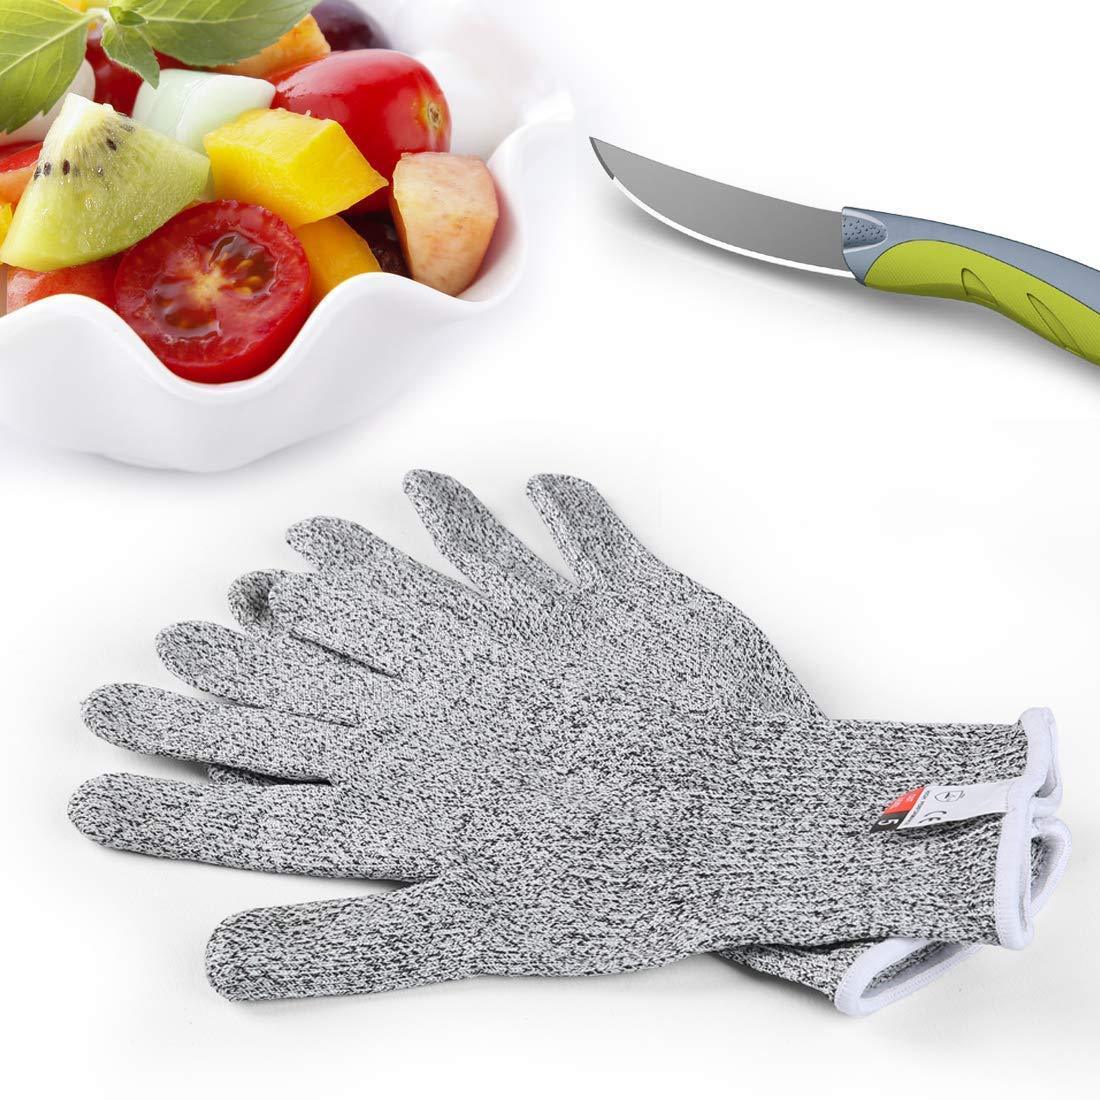 715 Level 5 Protection Cut Resistant Gloves (1 pair) DeoDap